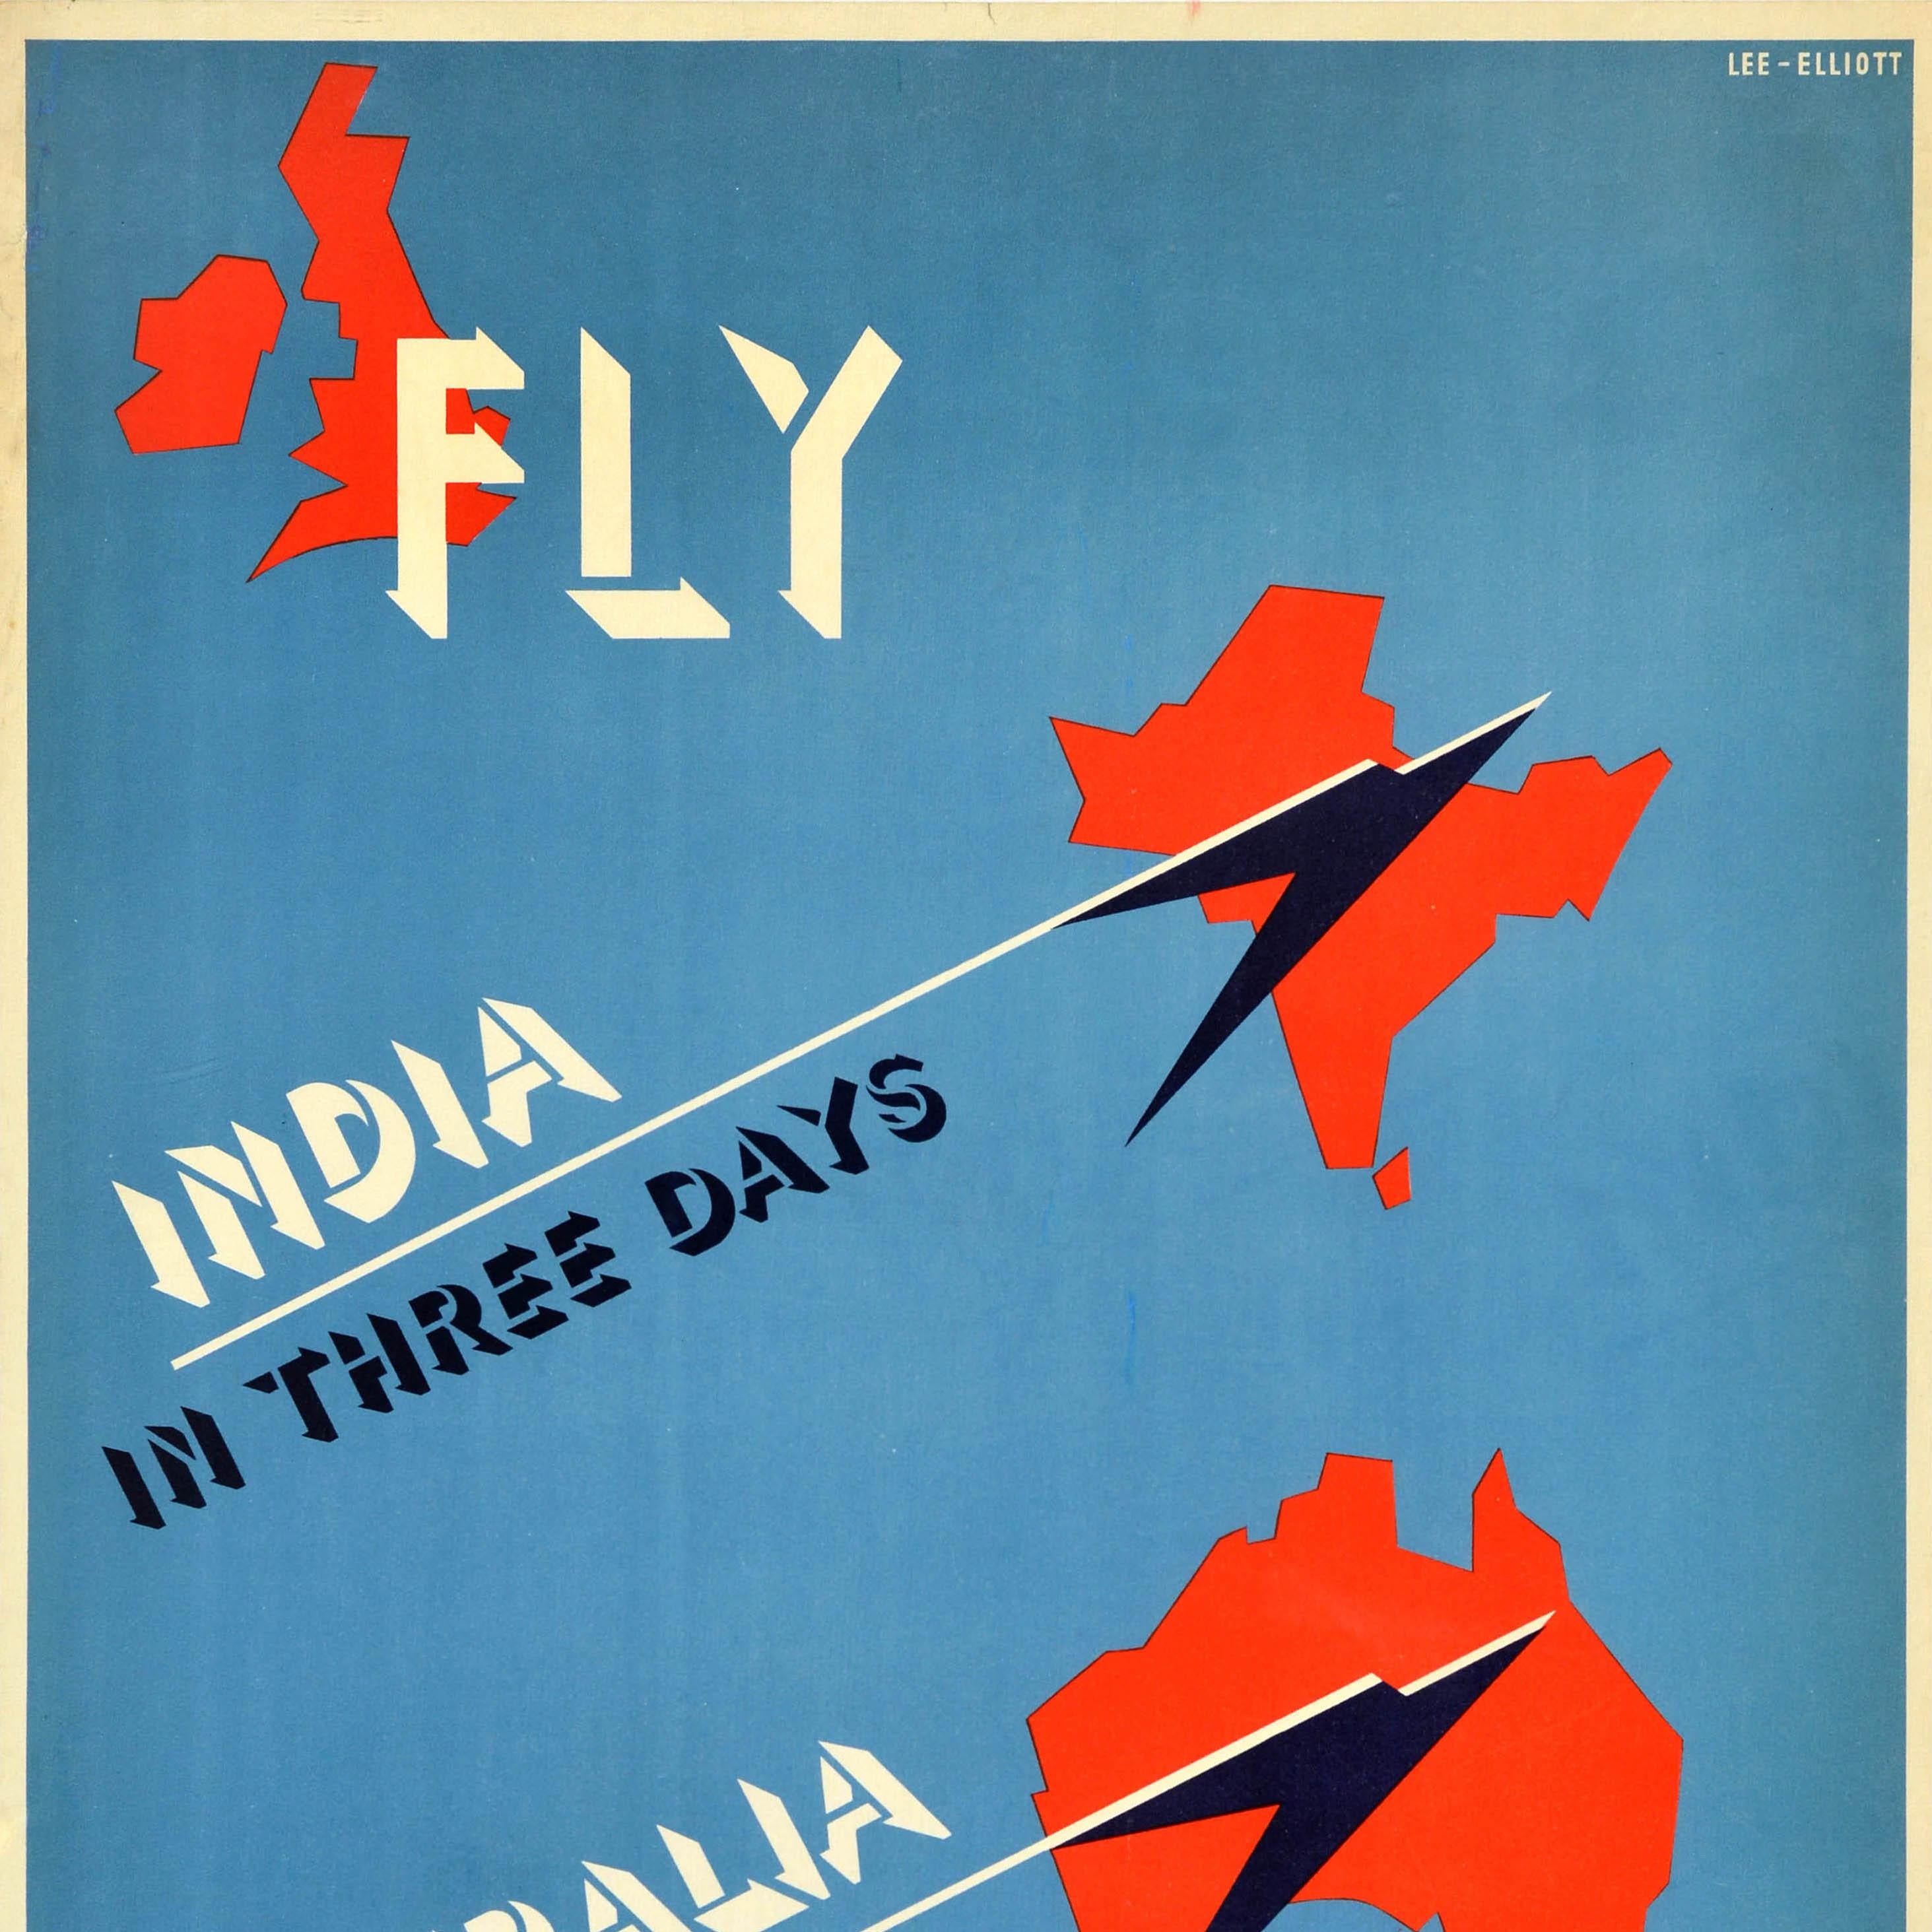 imperial airways poster